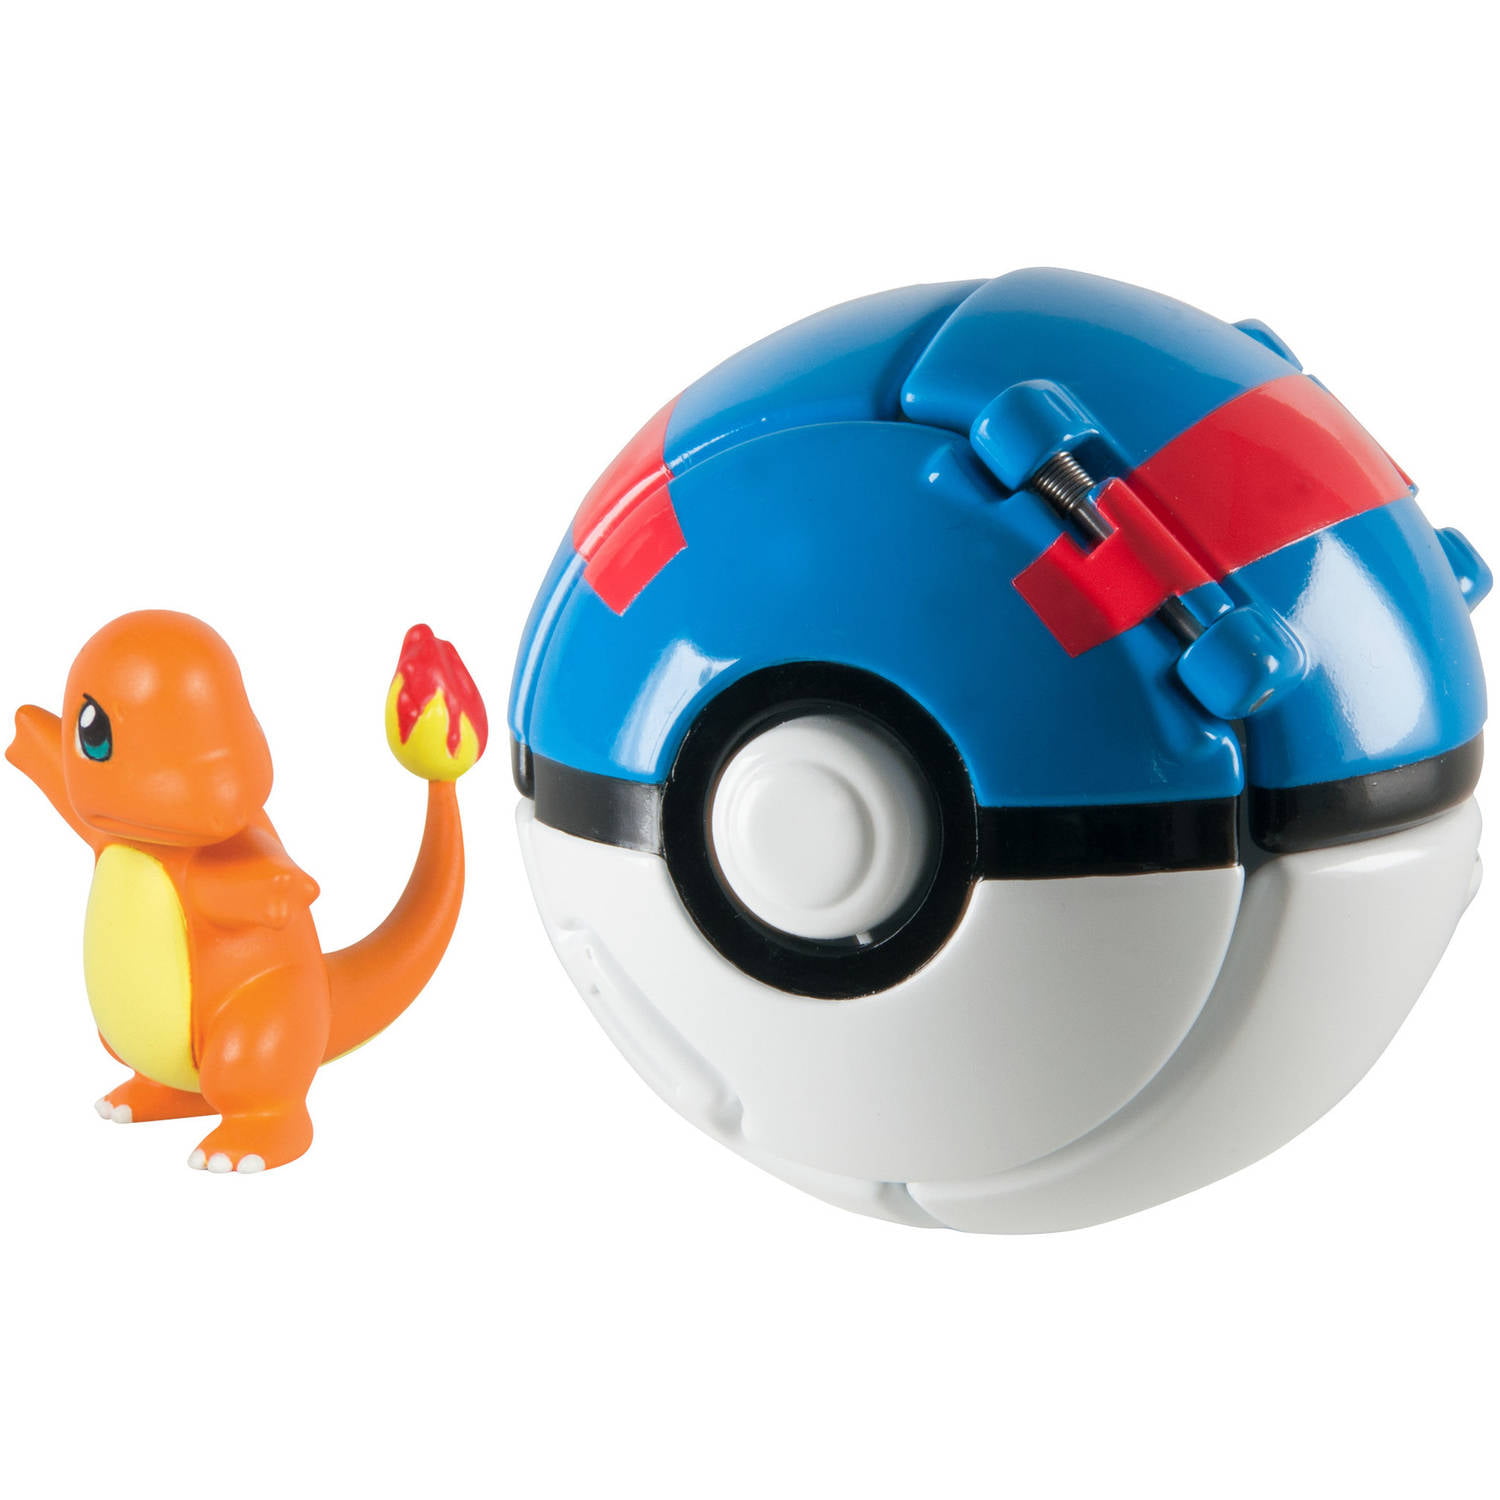 Pokemon Throw 'n' Pop Poke Ball, Charmander and Great Ball